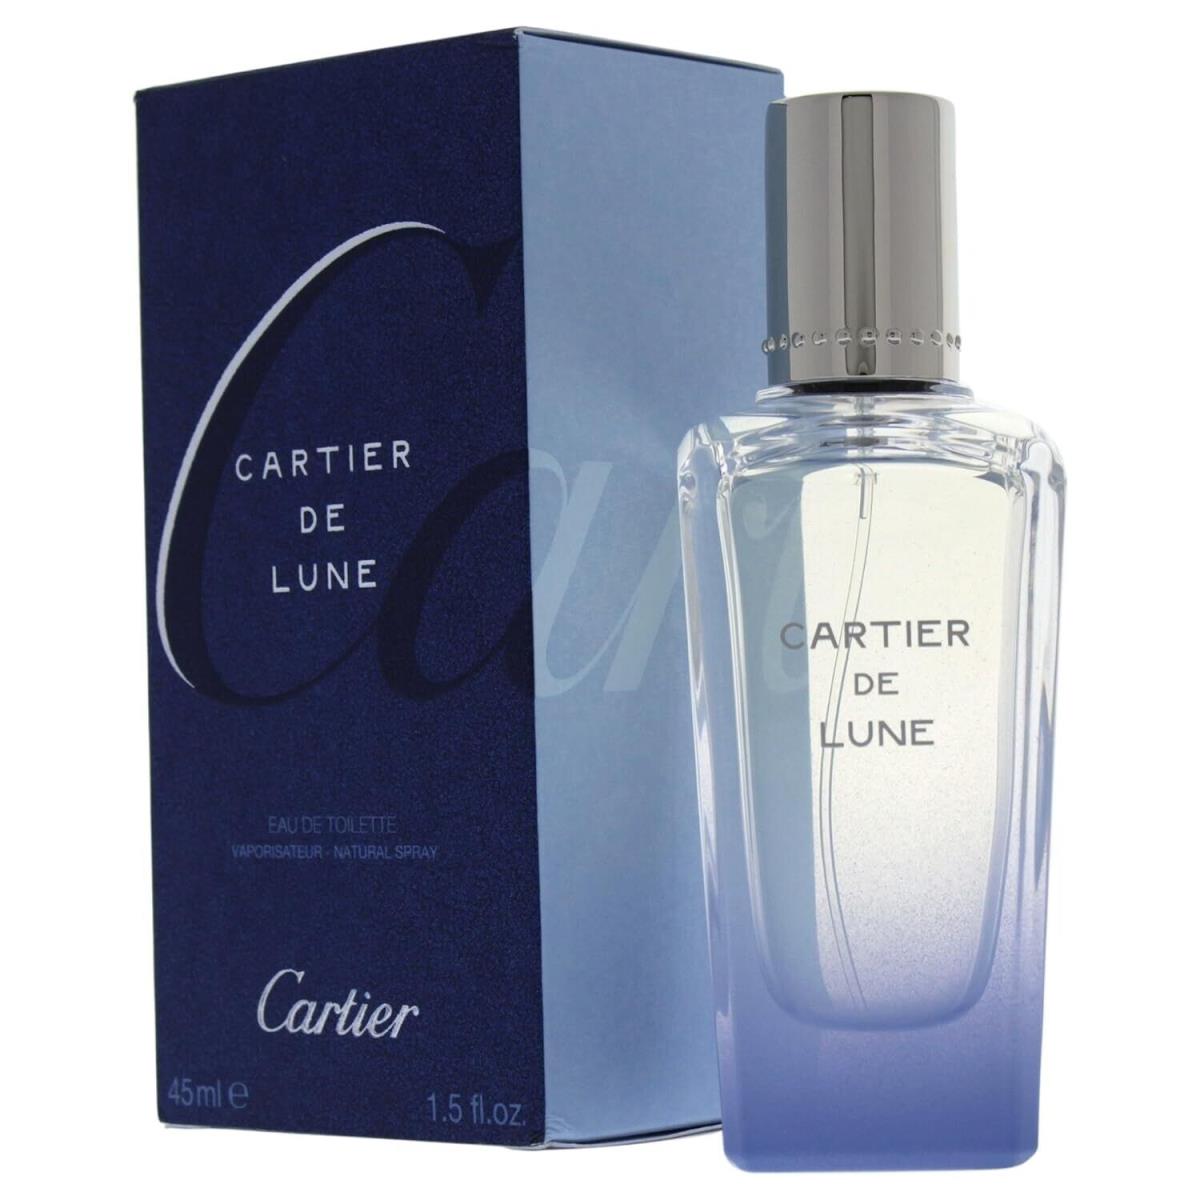 Cartier DE Lune by Cartier Women Edt Spray 1.5 oz